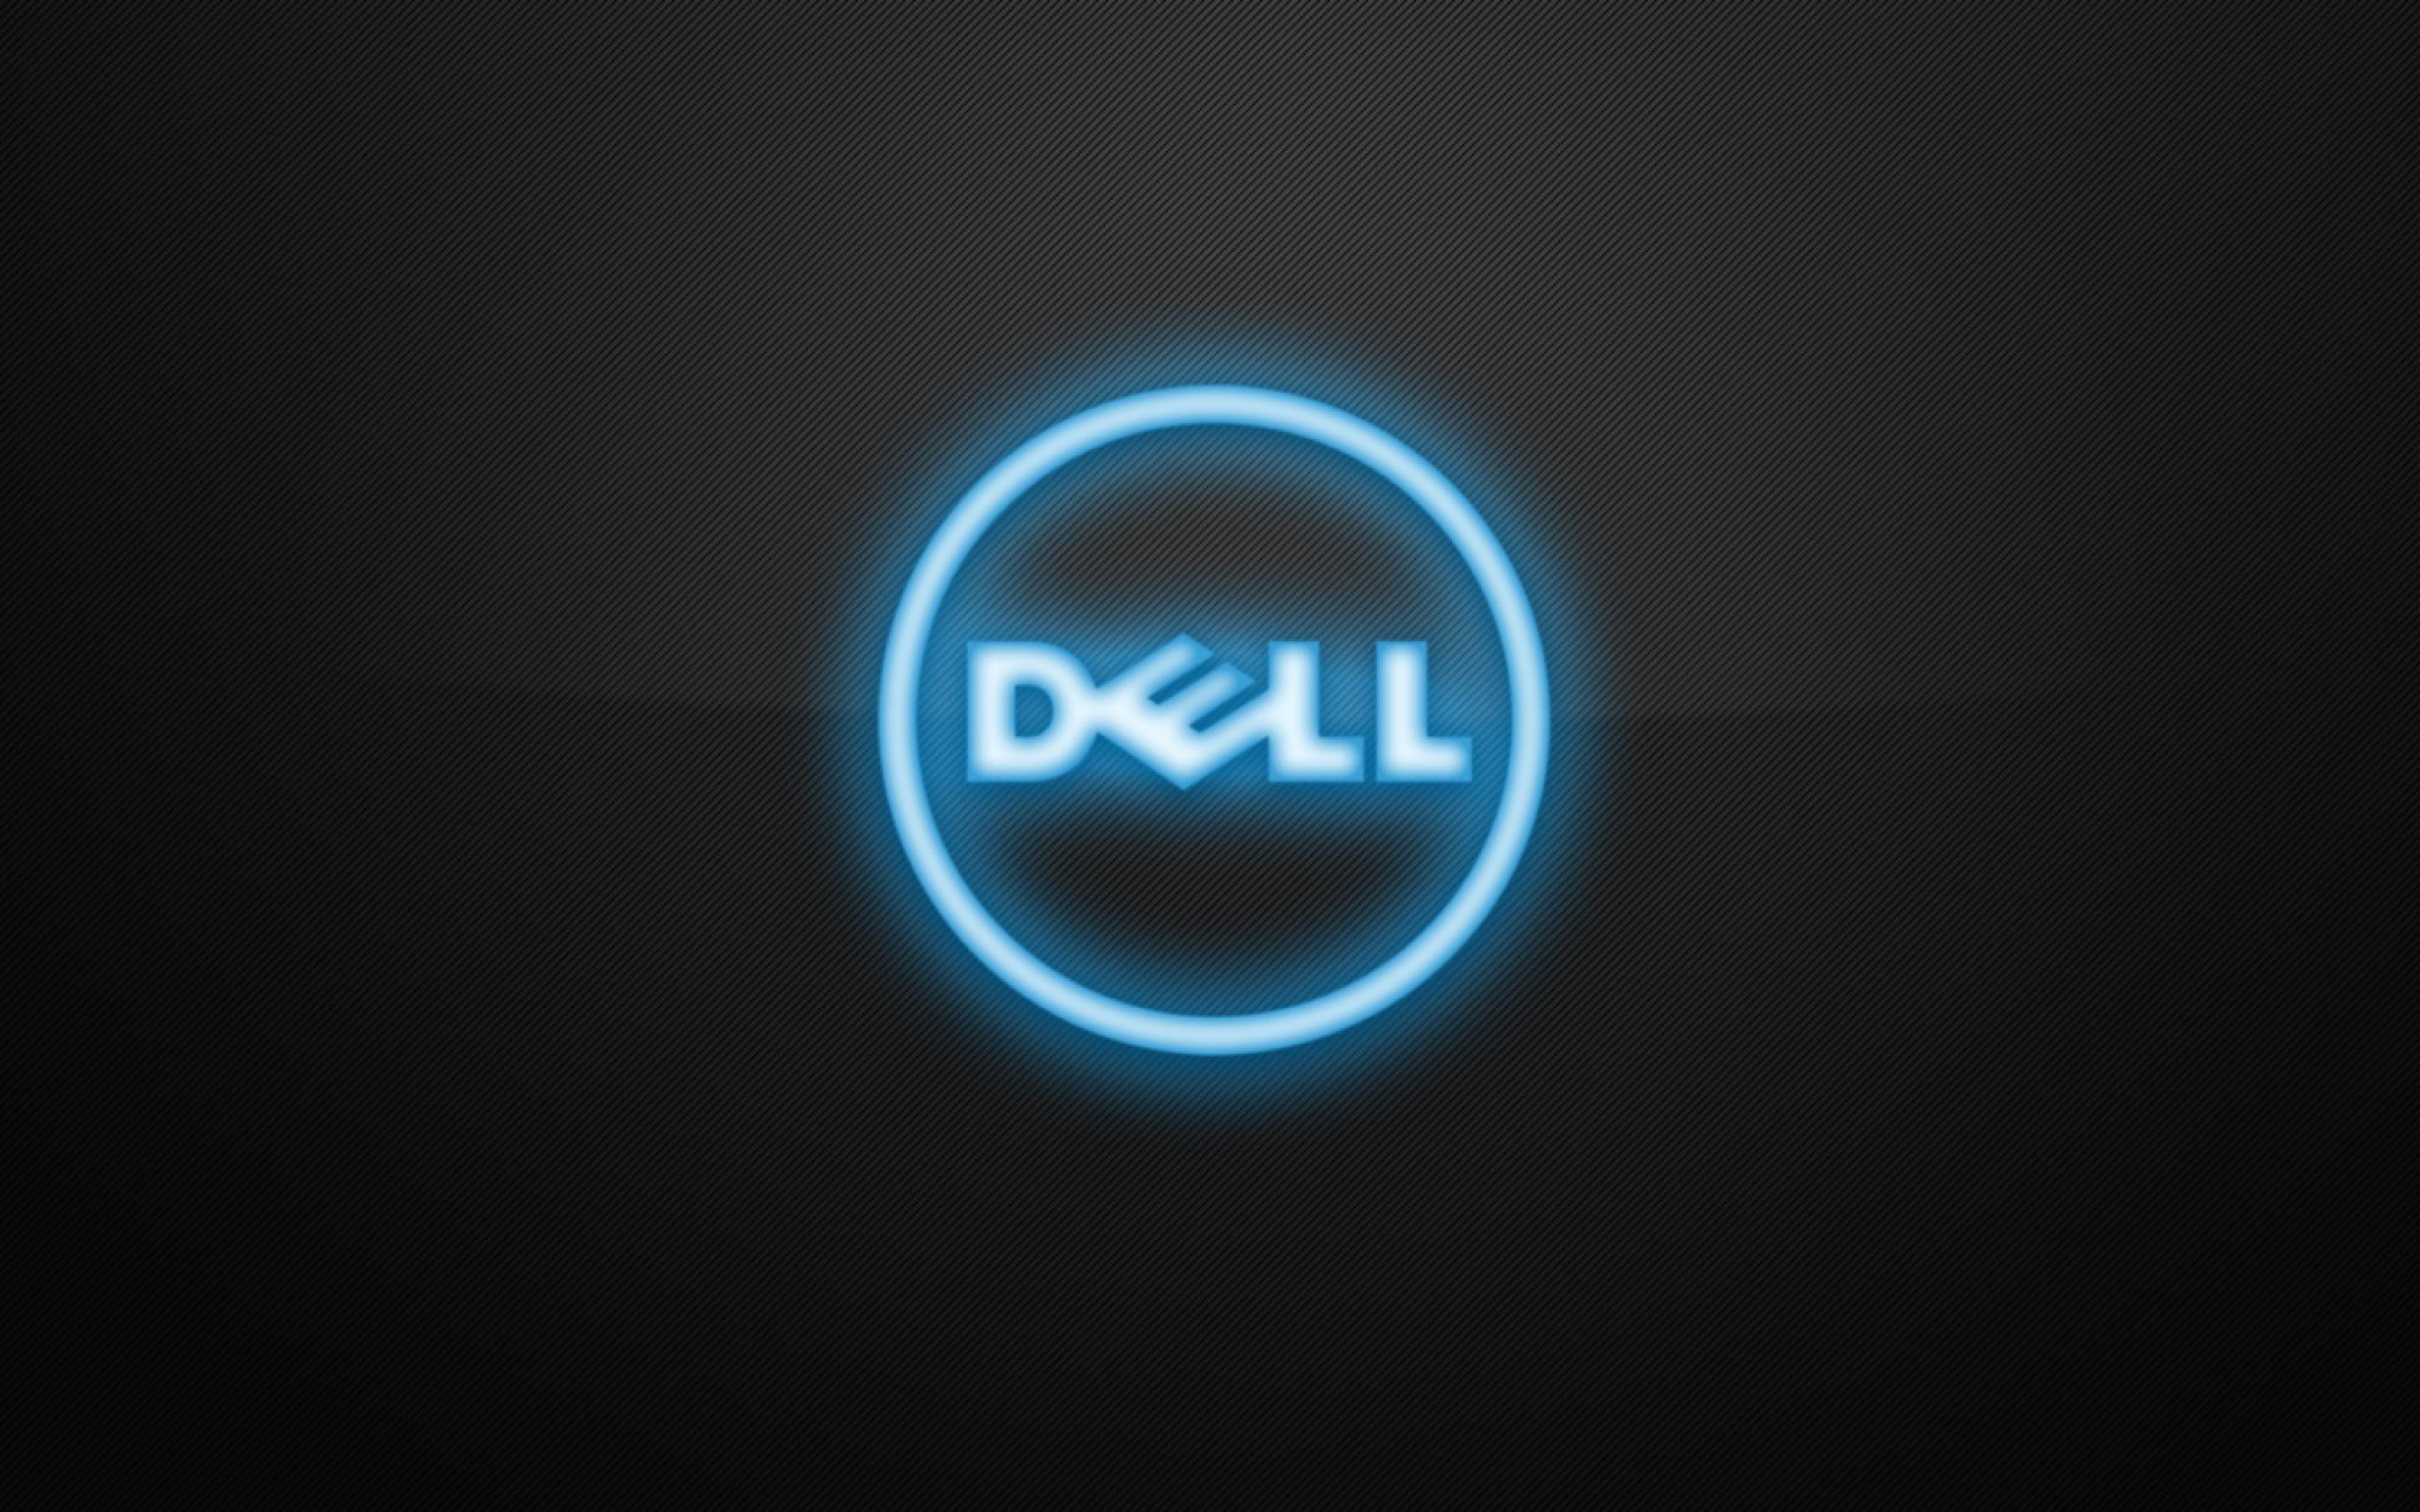 Download Dell Logo Desktop Wallpaper 877 3840x2400 px High